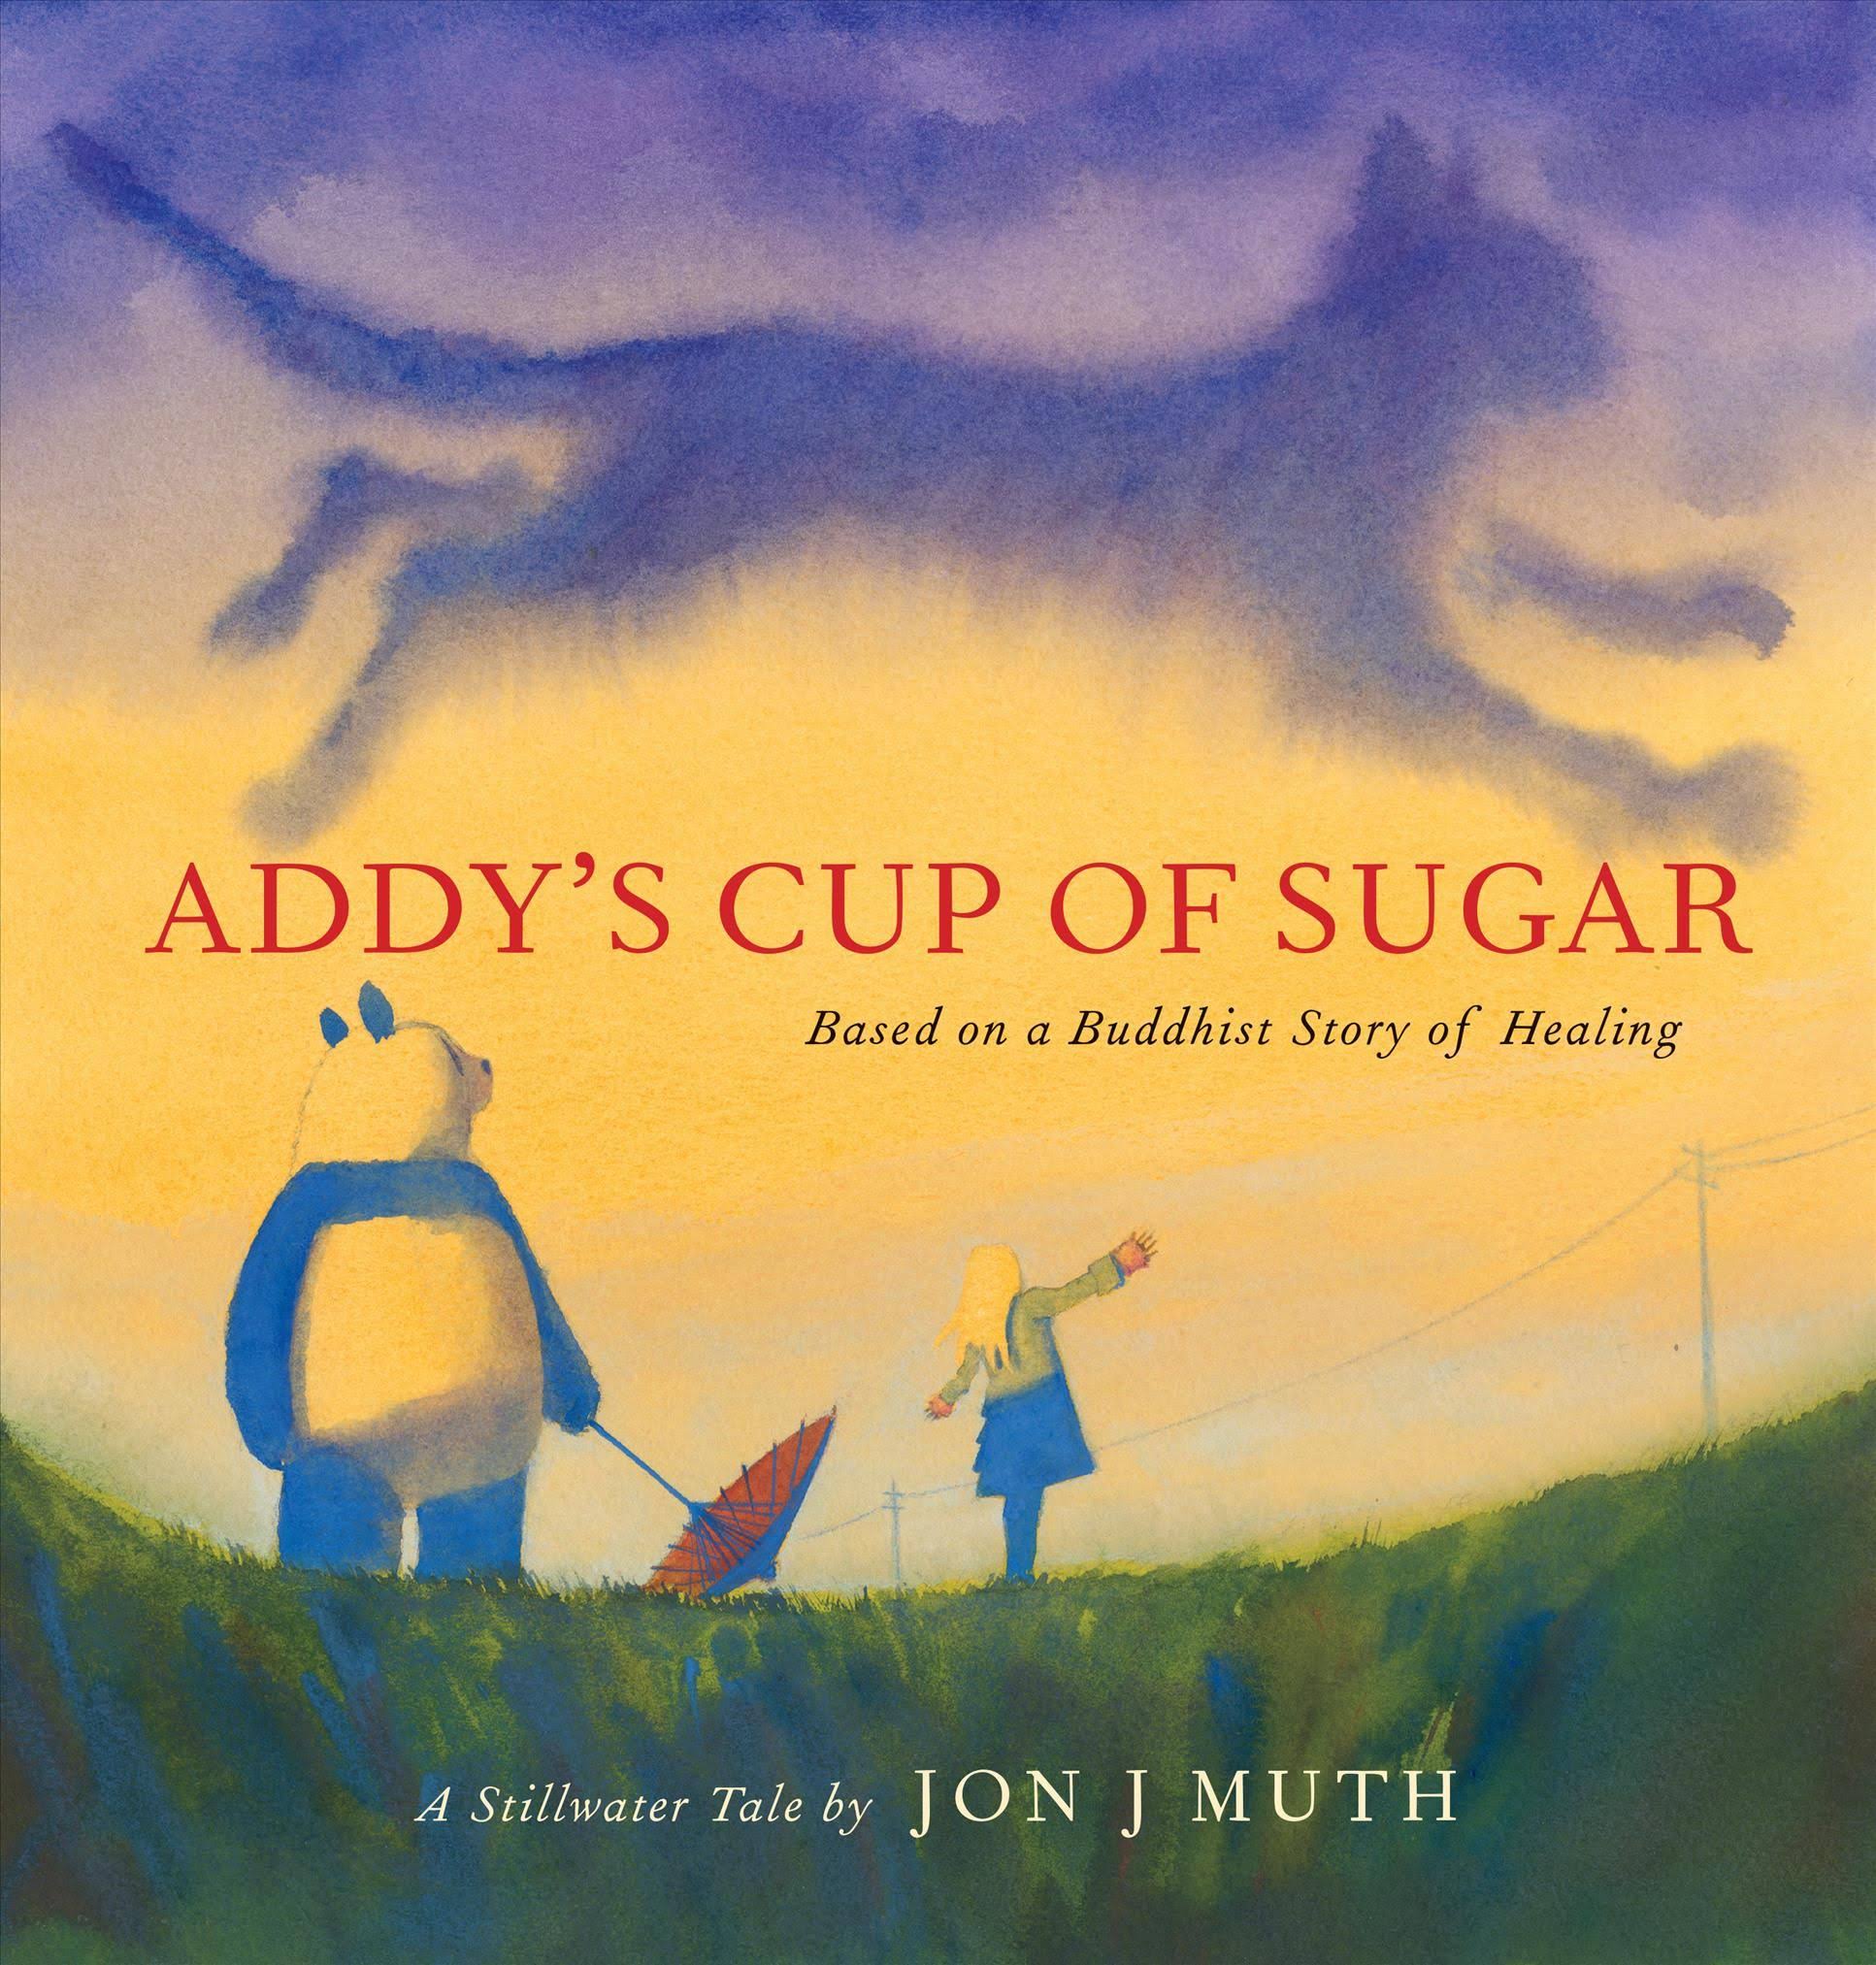 Addy's Cup of Sugar (a Stillwater Book) by Jon J Muth